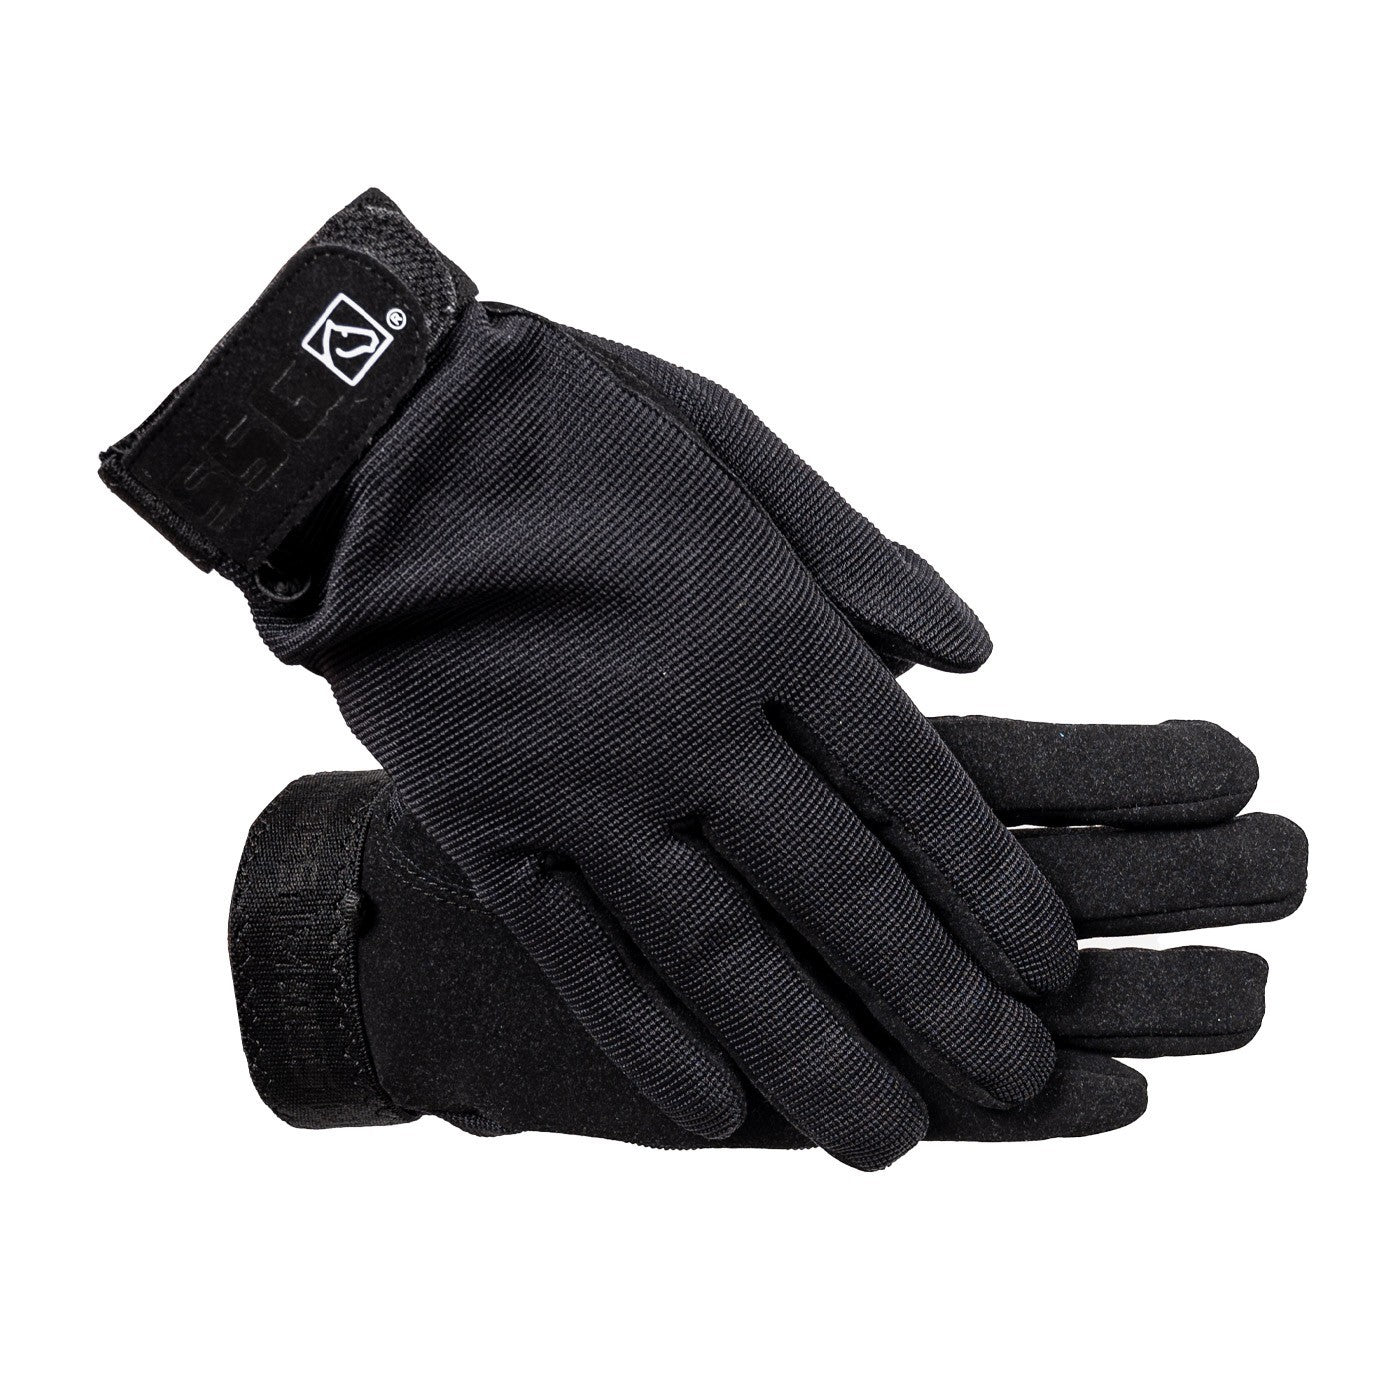 Ladies SSG All Weather Gloves- Black, Navy,Brown